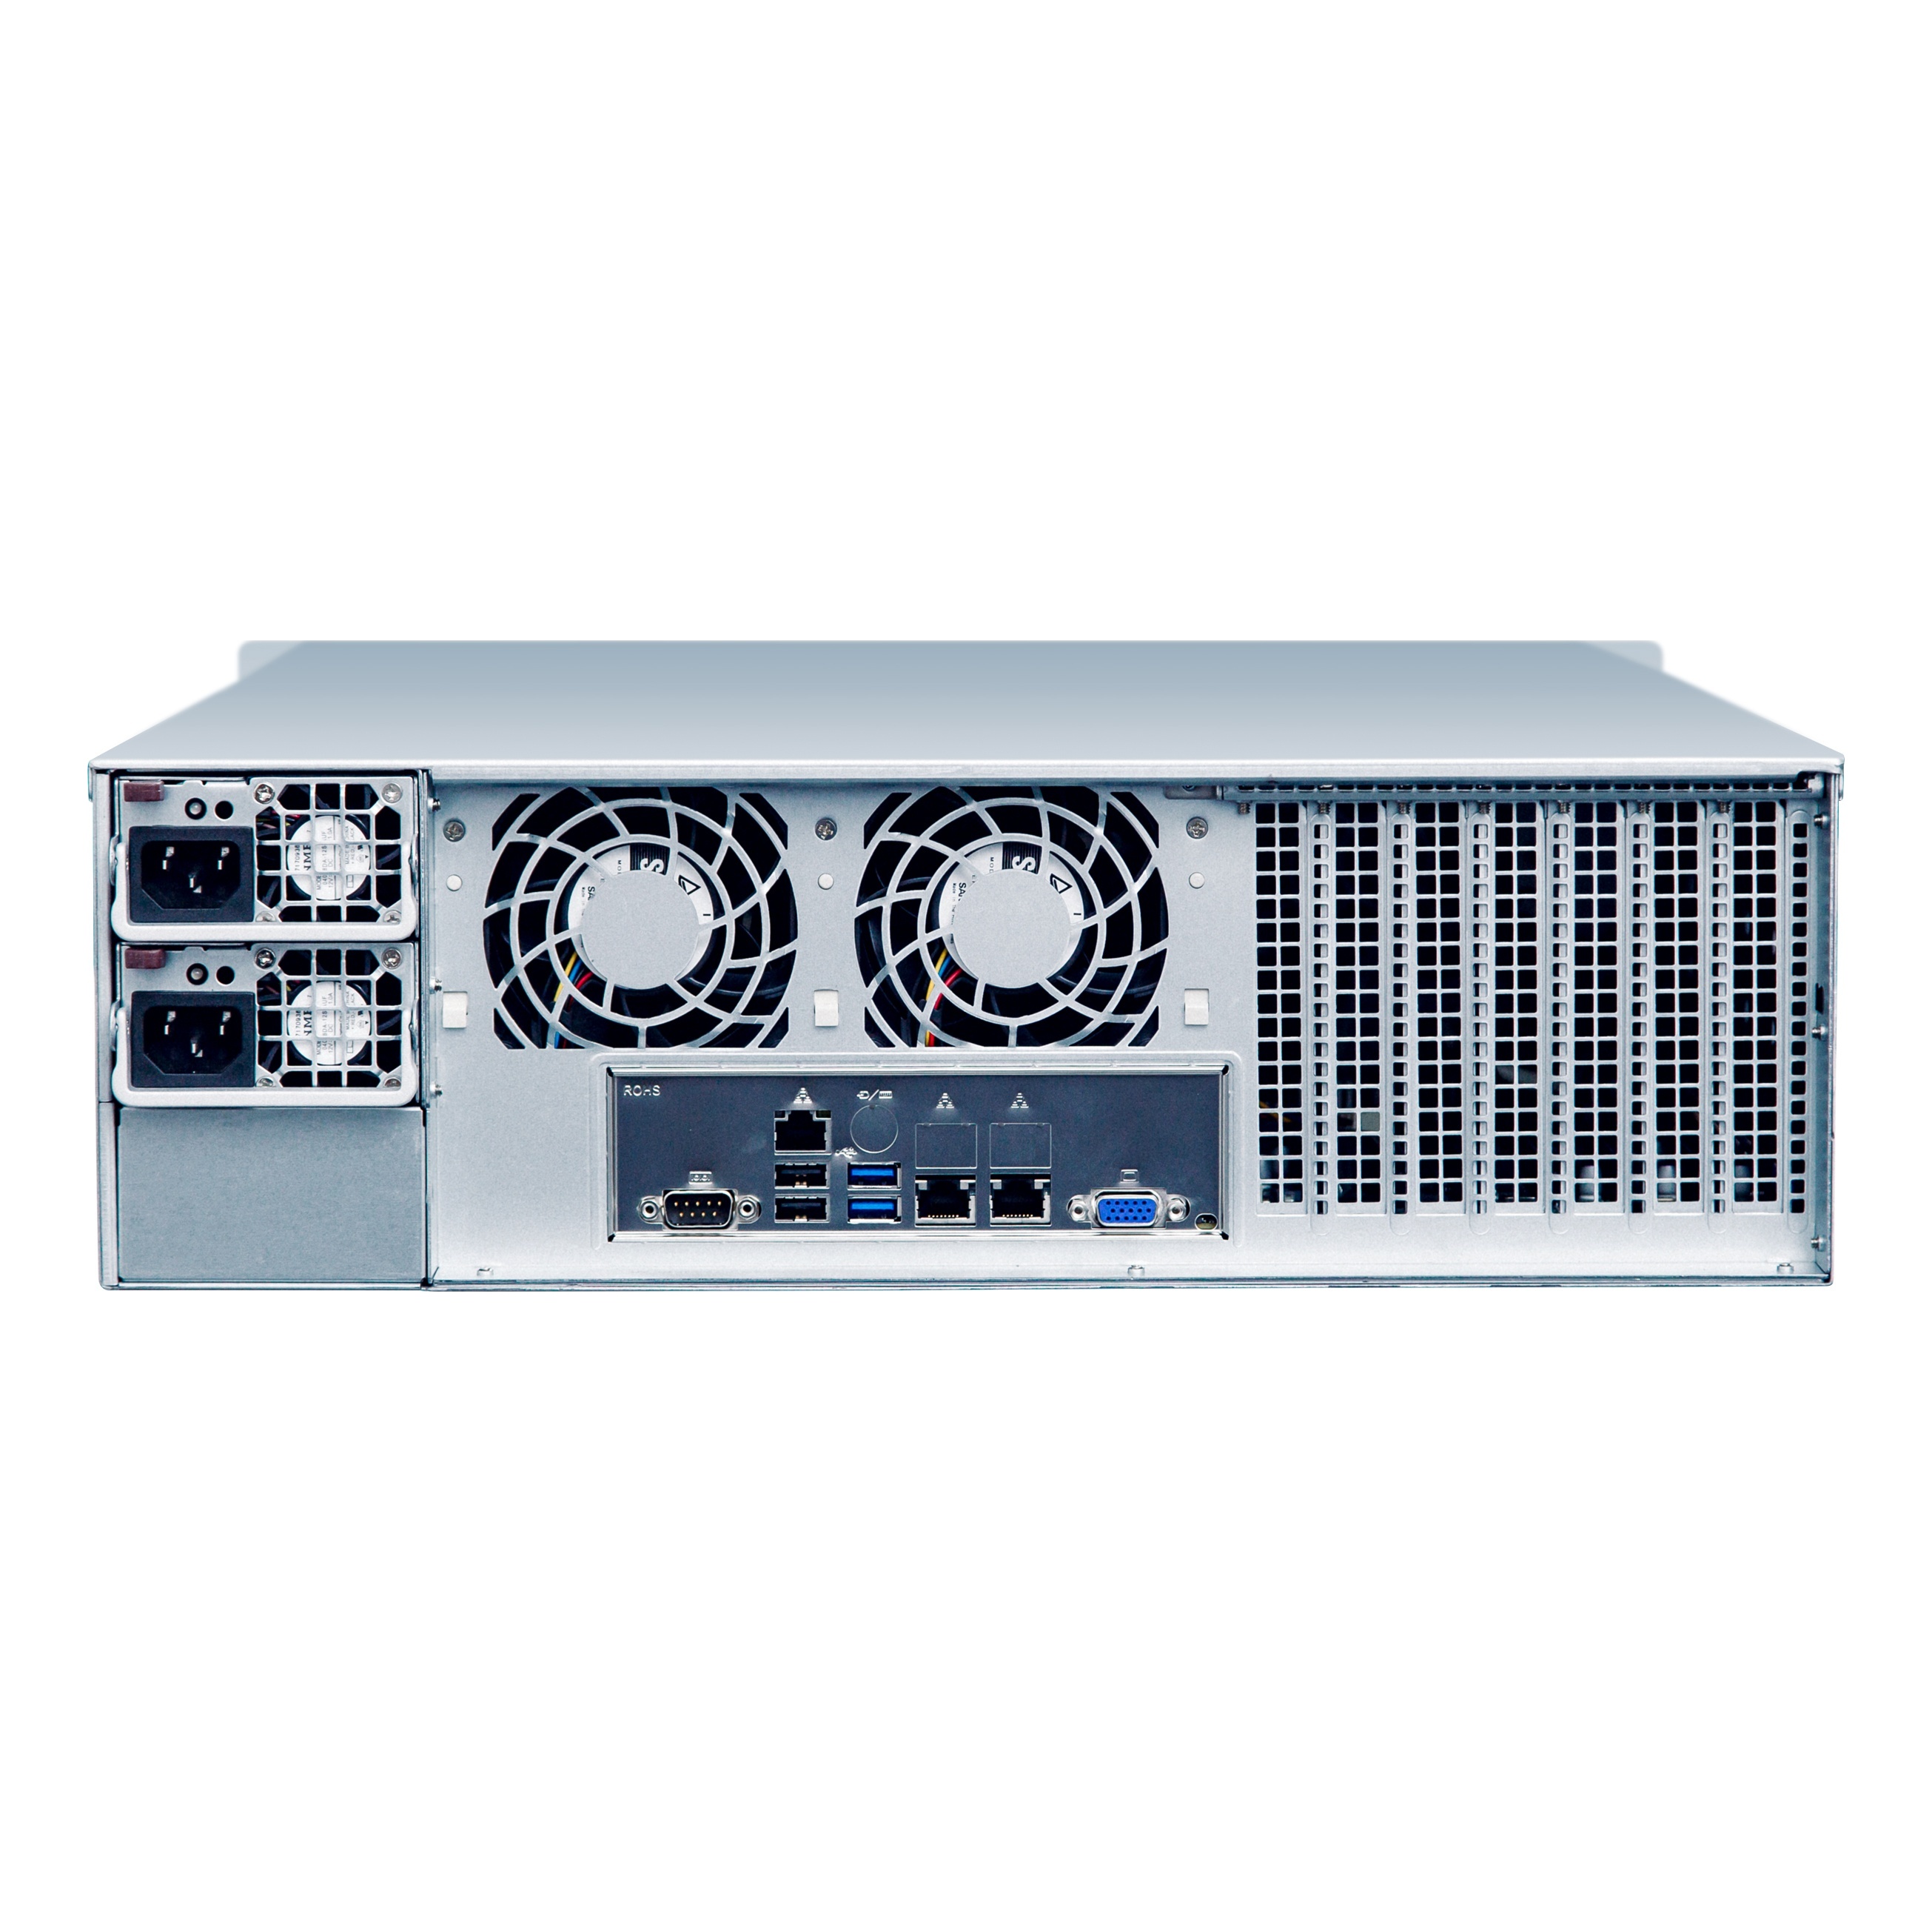 Сервер IPDROM Enterprise EkC1 139196